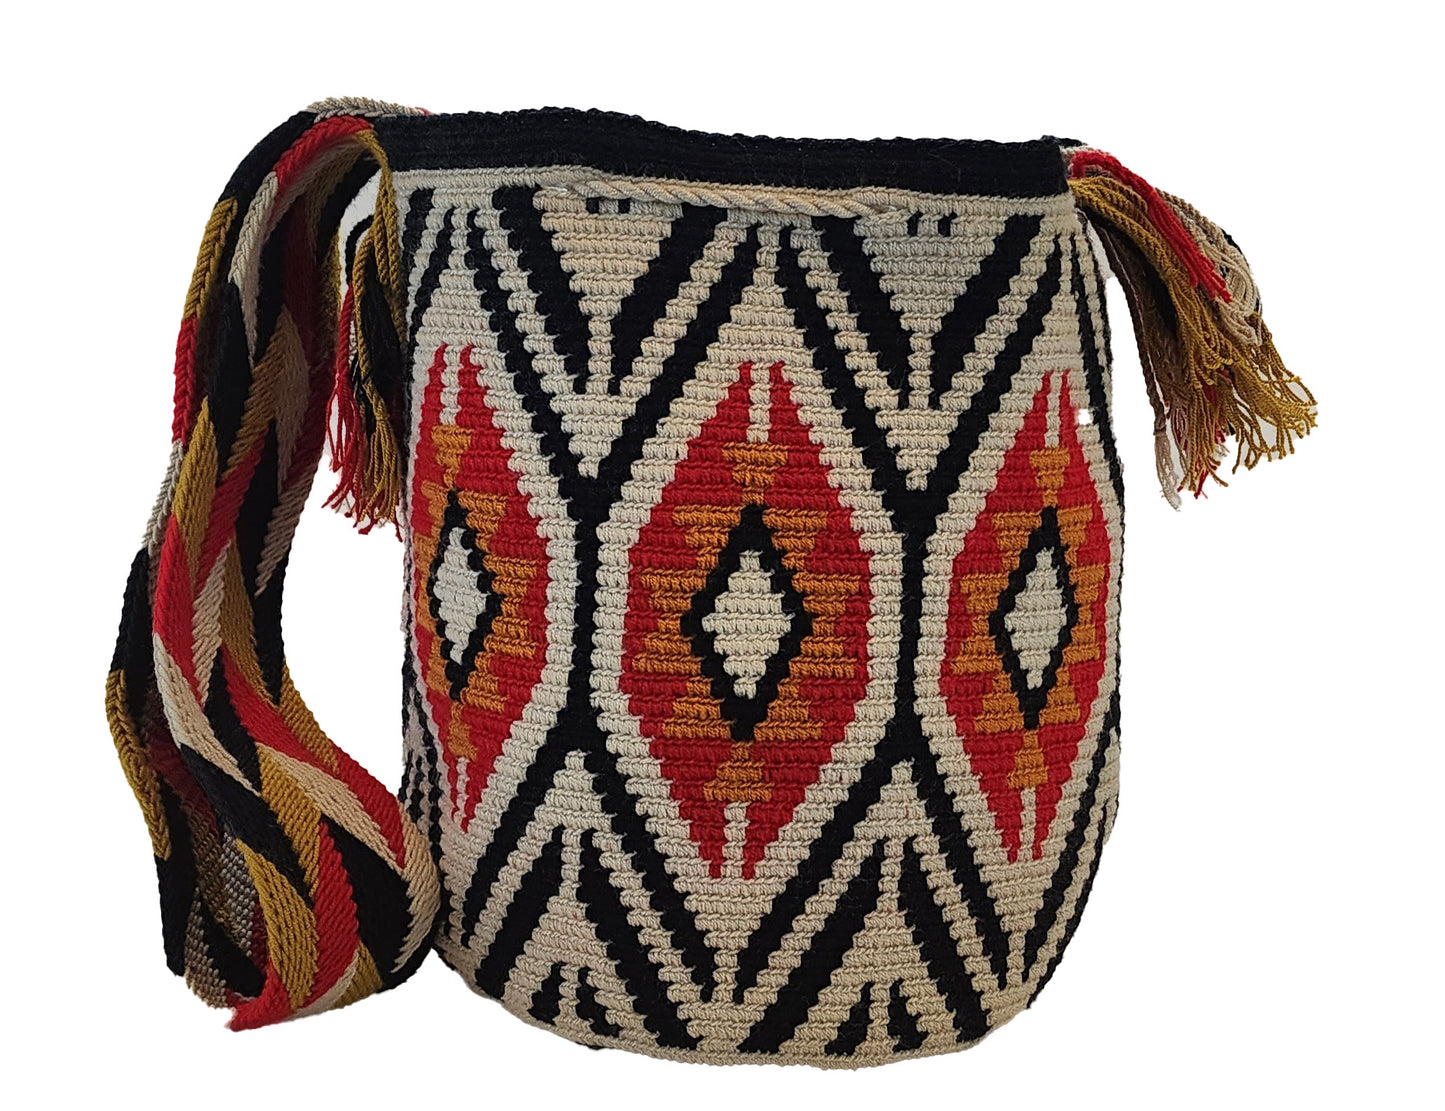 Mercy Large Handmade Wayuu Mochila Bag back